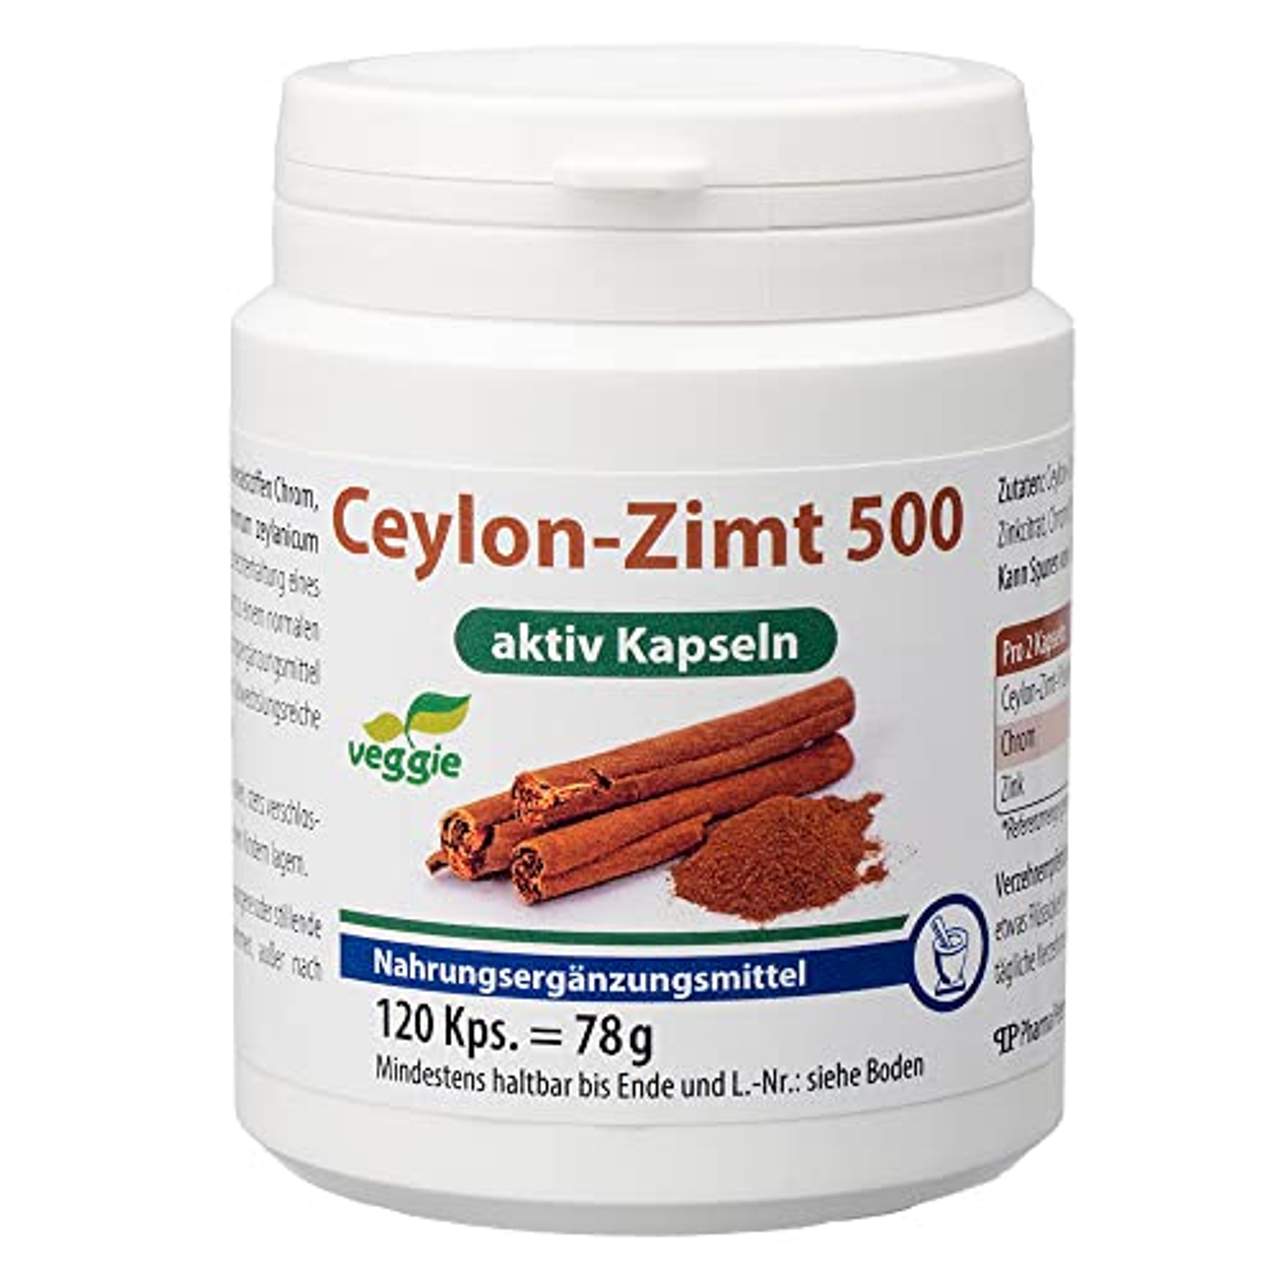 Pharma-Peter CEYLON-Zimt 500 aktiv Kapseln